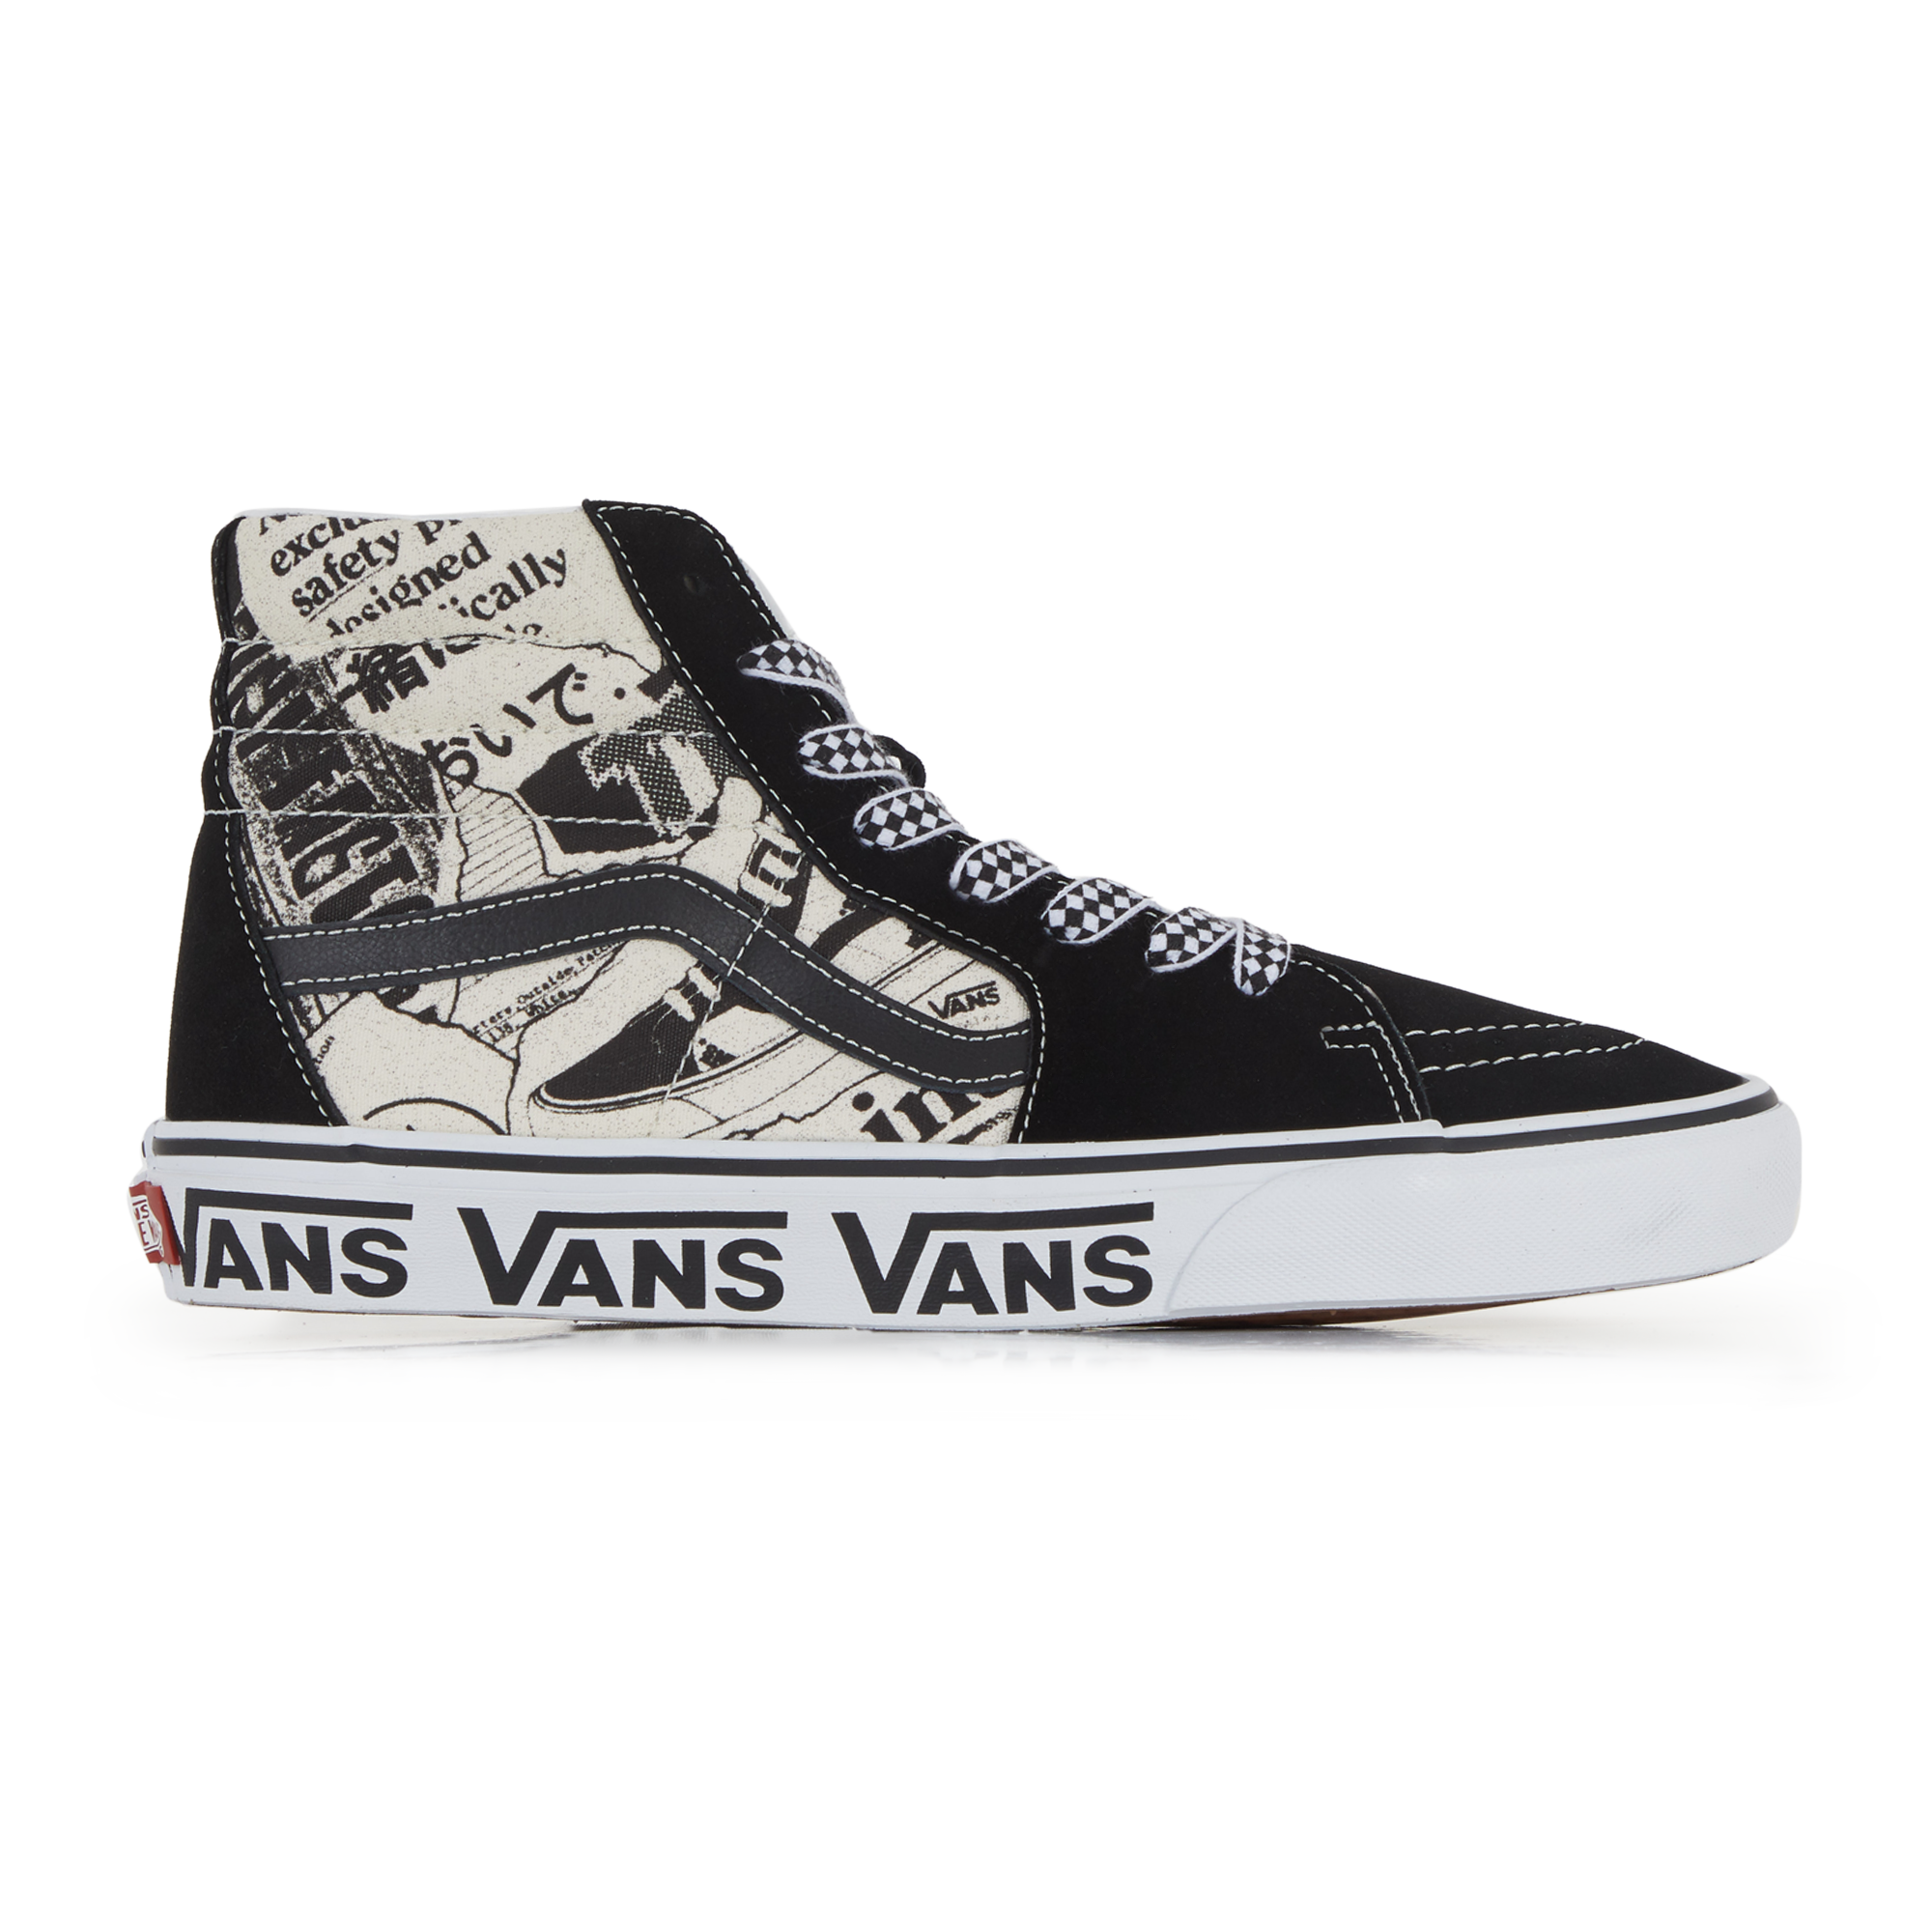 Buy Vans Unisex's Era Black Sneakers - 7 UK/India (40.5 EU) (VN000YBXDED1)  at Amazon.in